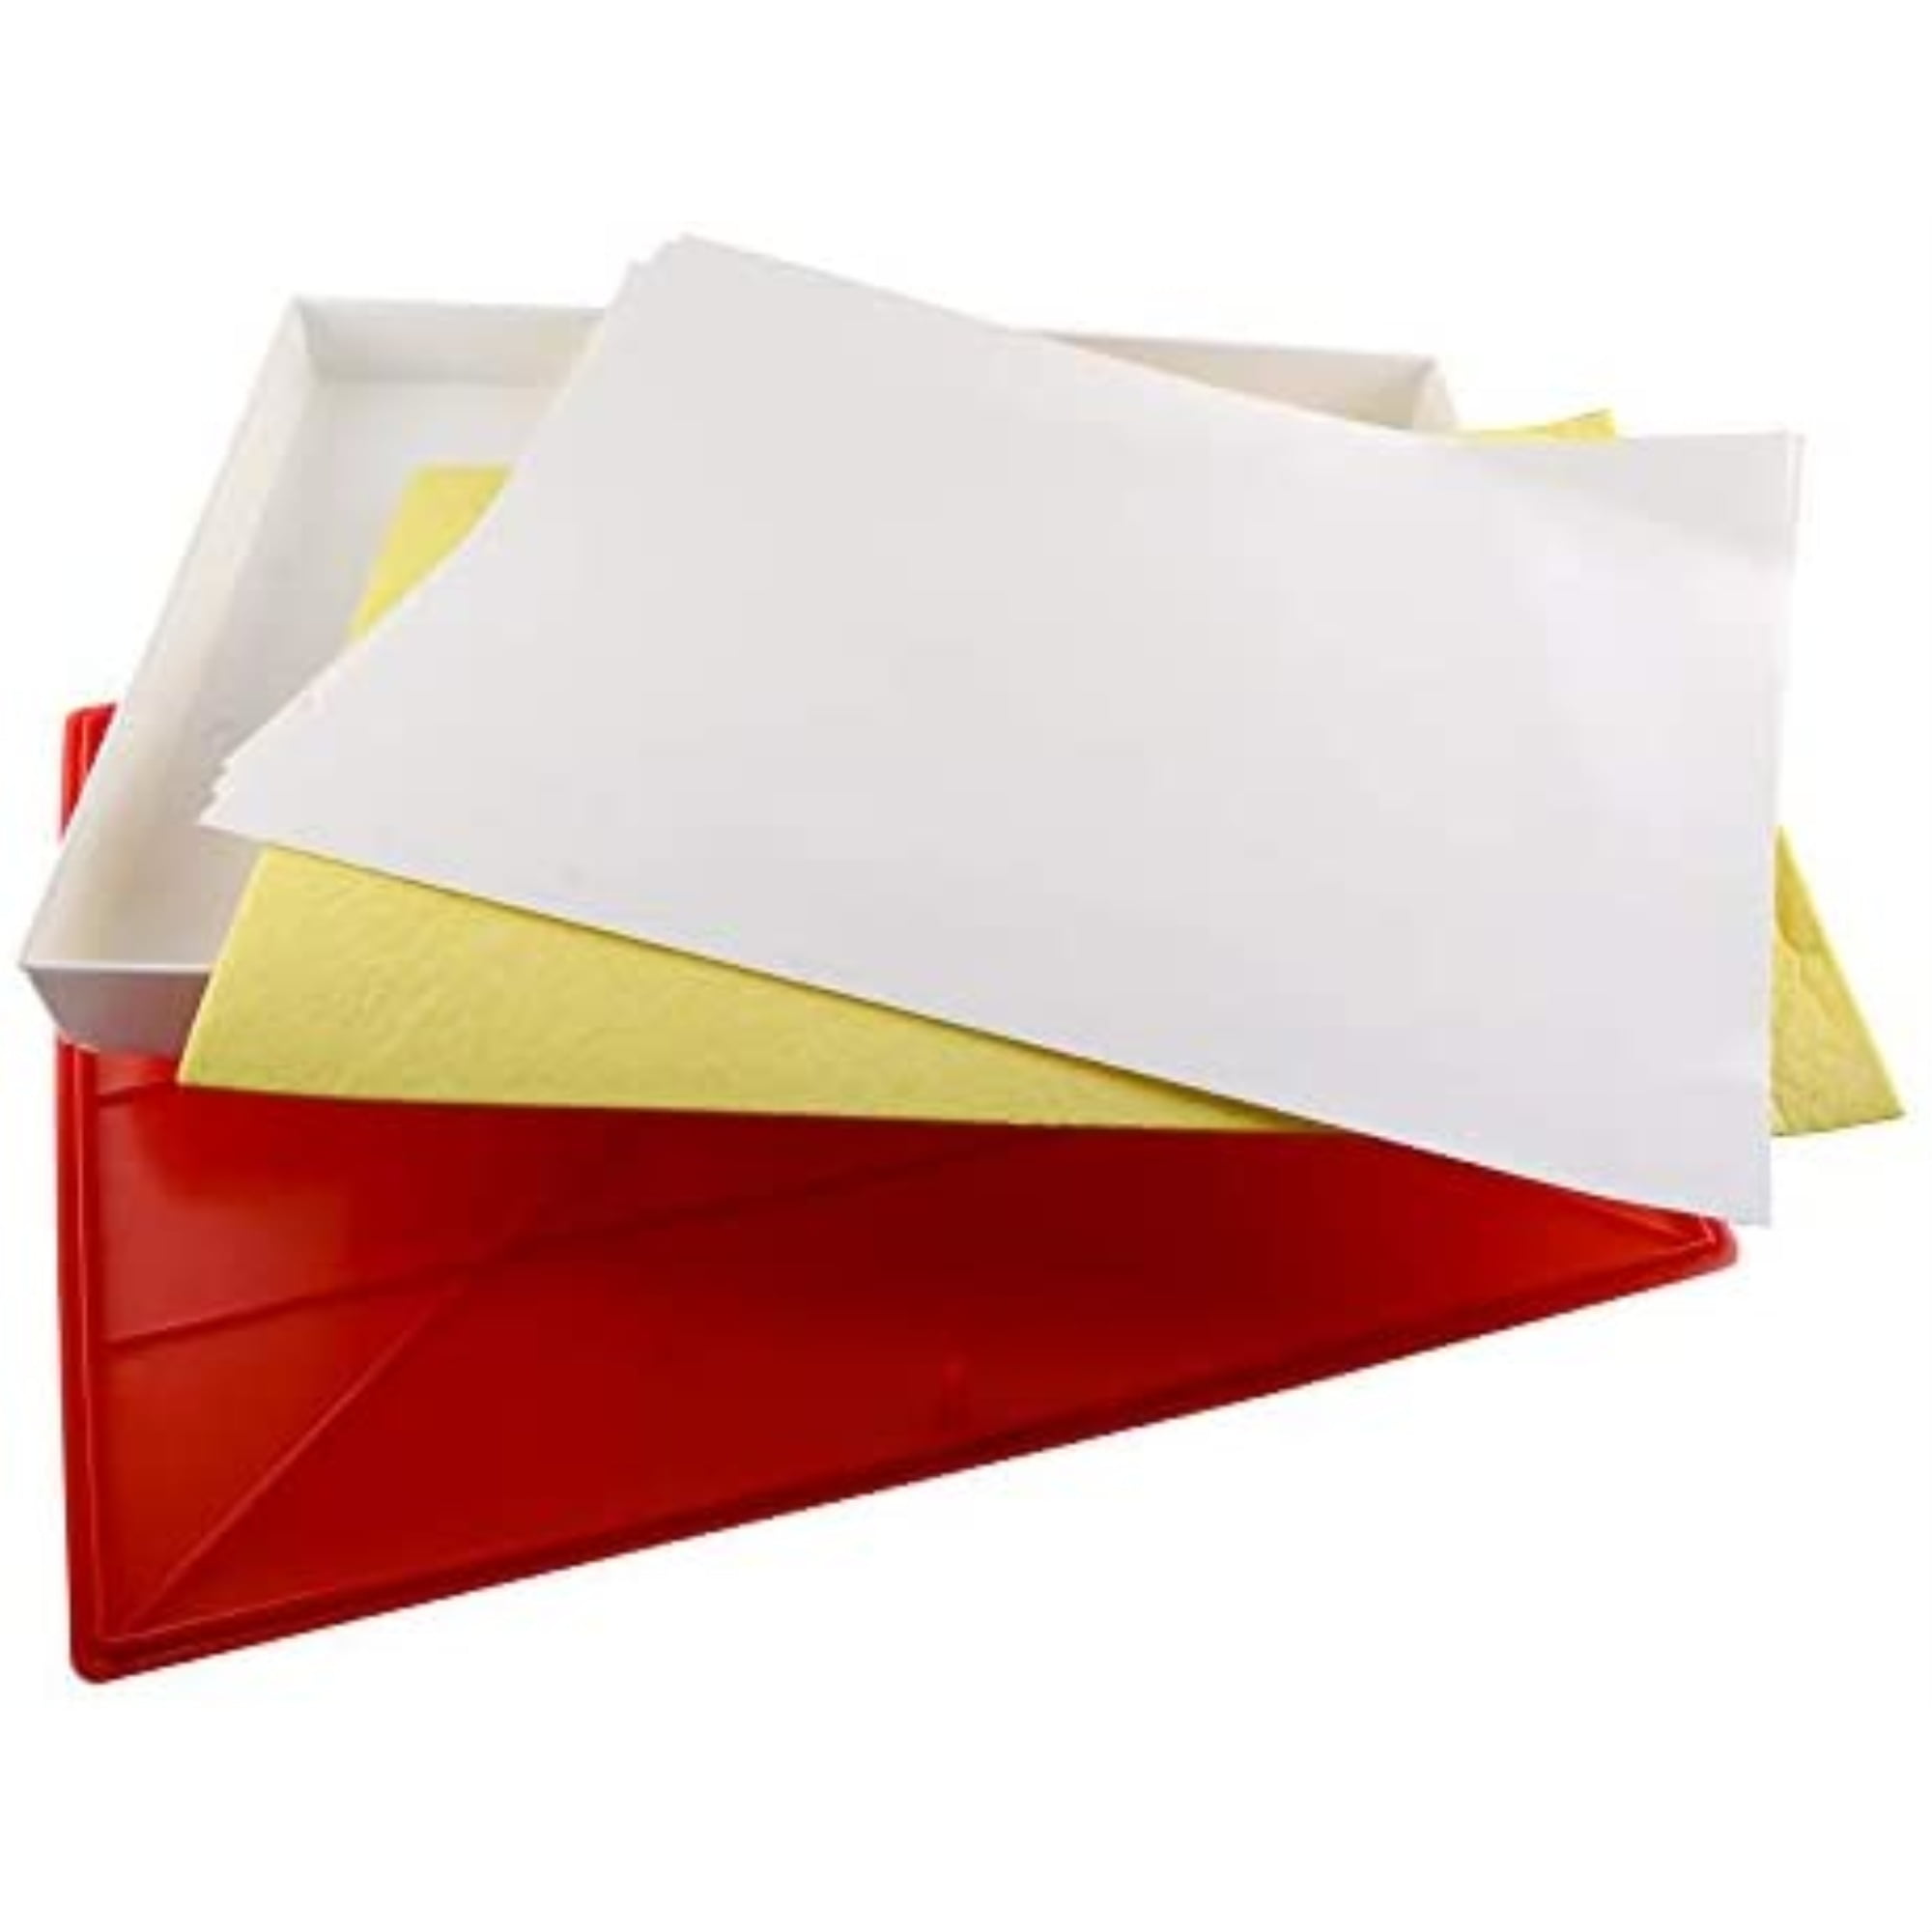 Masterson Sta-Wet Premier Art PALETTE BOX Red 16”x 12” Sponge & Paper NEW